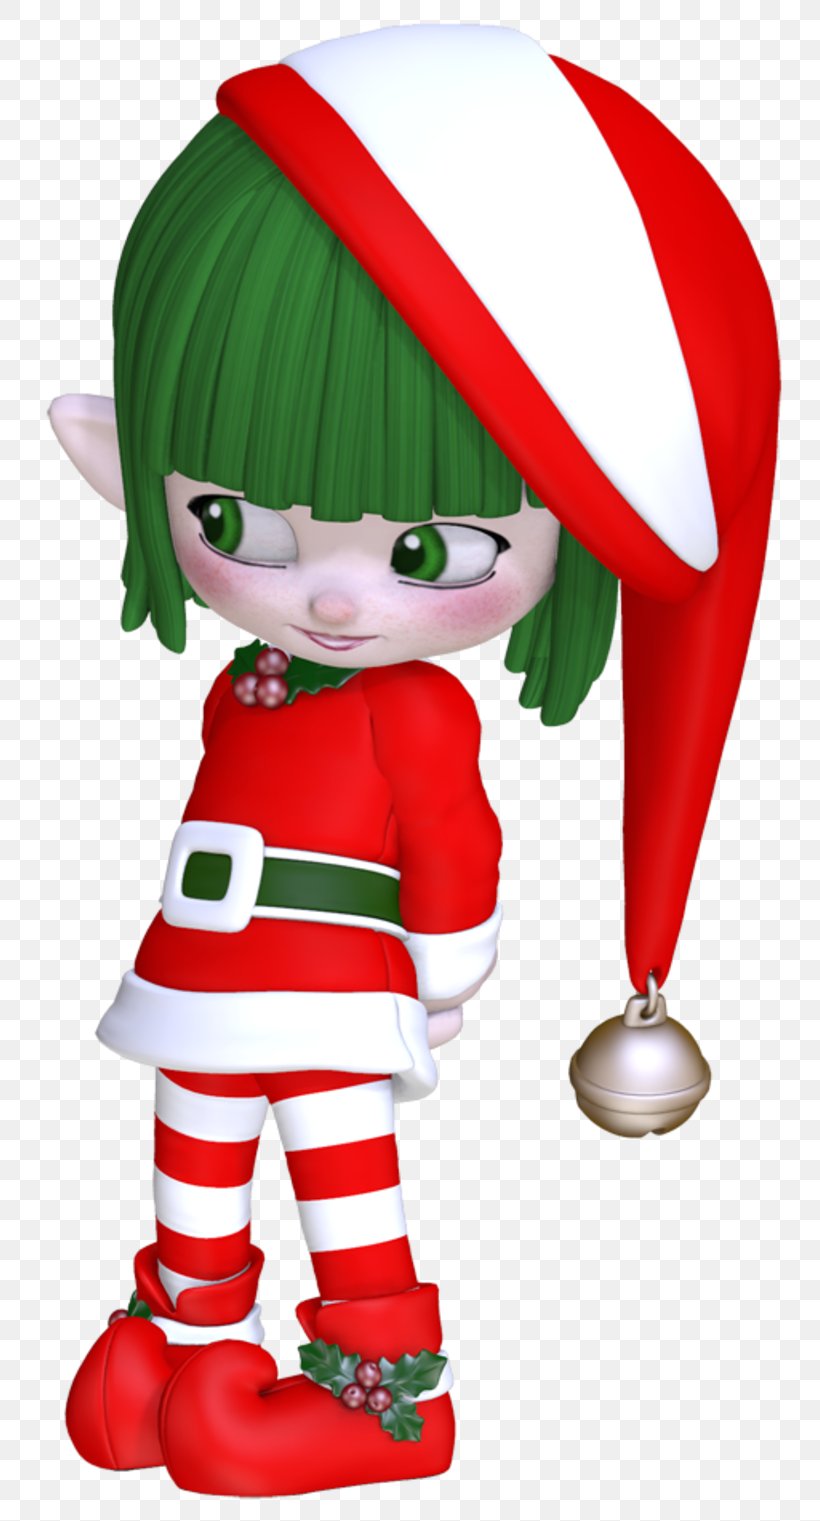 The Elf On The Shelf Christmas Elf Clip Art, PNG, 800x1521px, Elf On The Shelf, Blog, Christmas, Christmas And Holiday Season, Christmas Elf Download Free